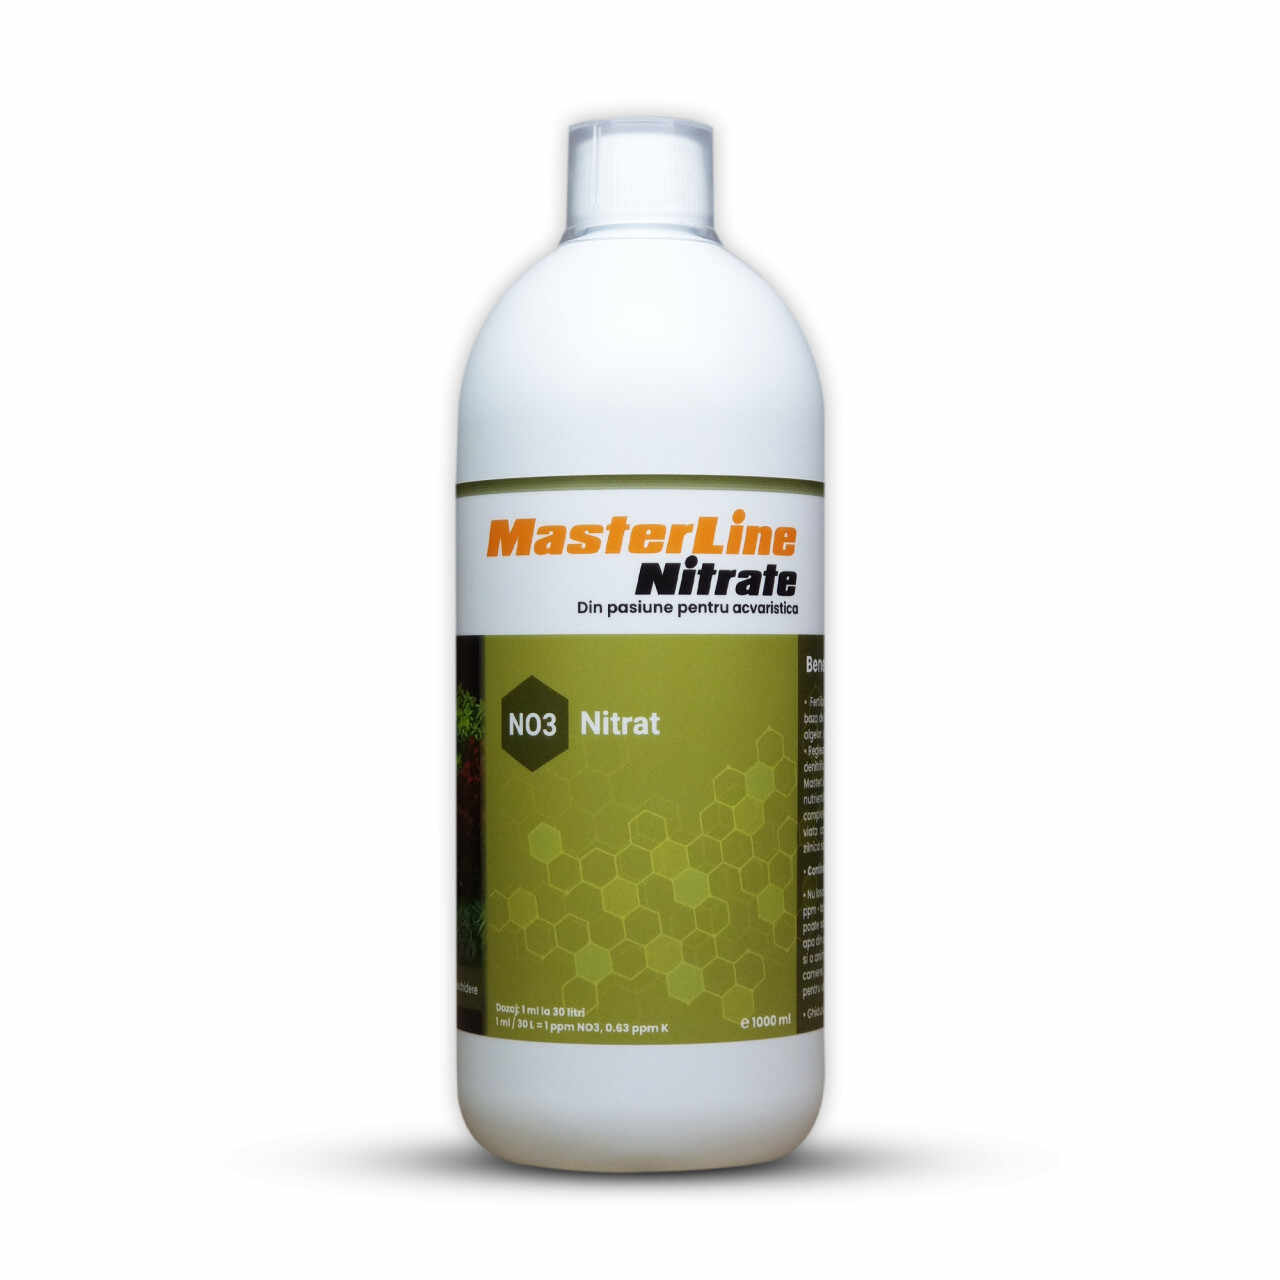 Masterline Nitrate, 1000ml